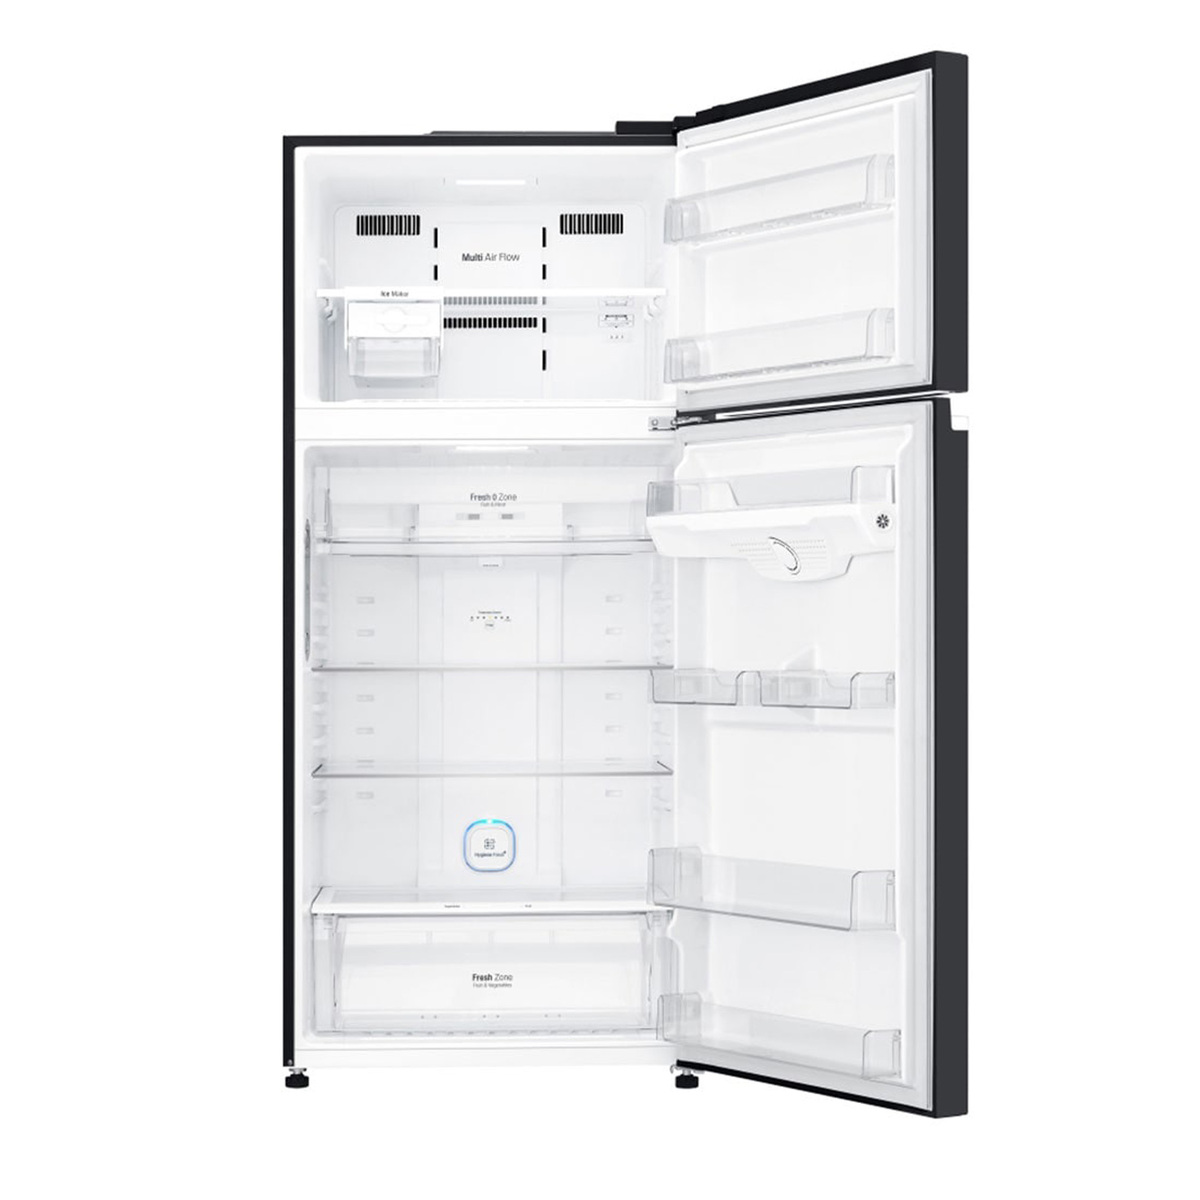 LG Double Door Refrigerator, 506 L, Black Glass, GN-C782SGGL